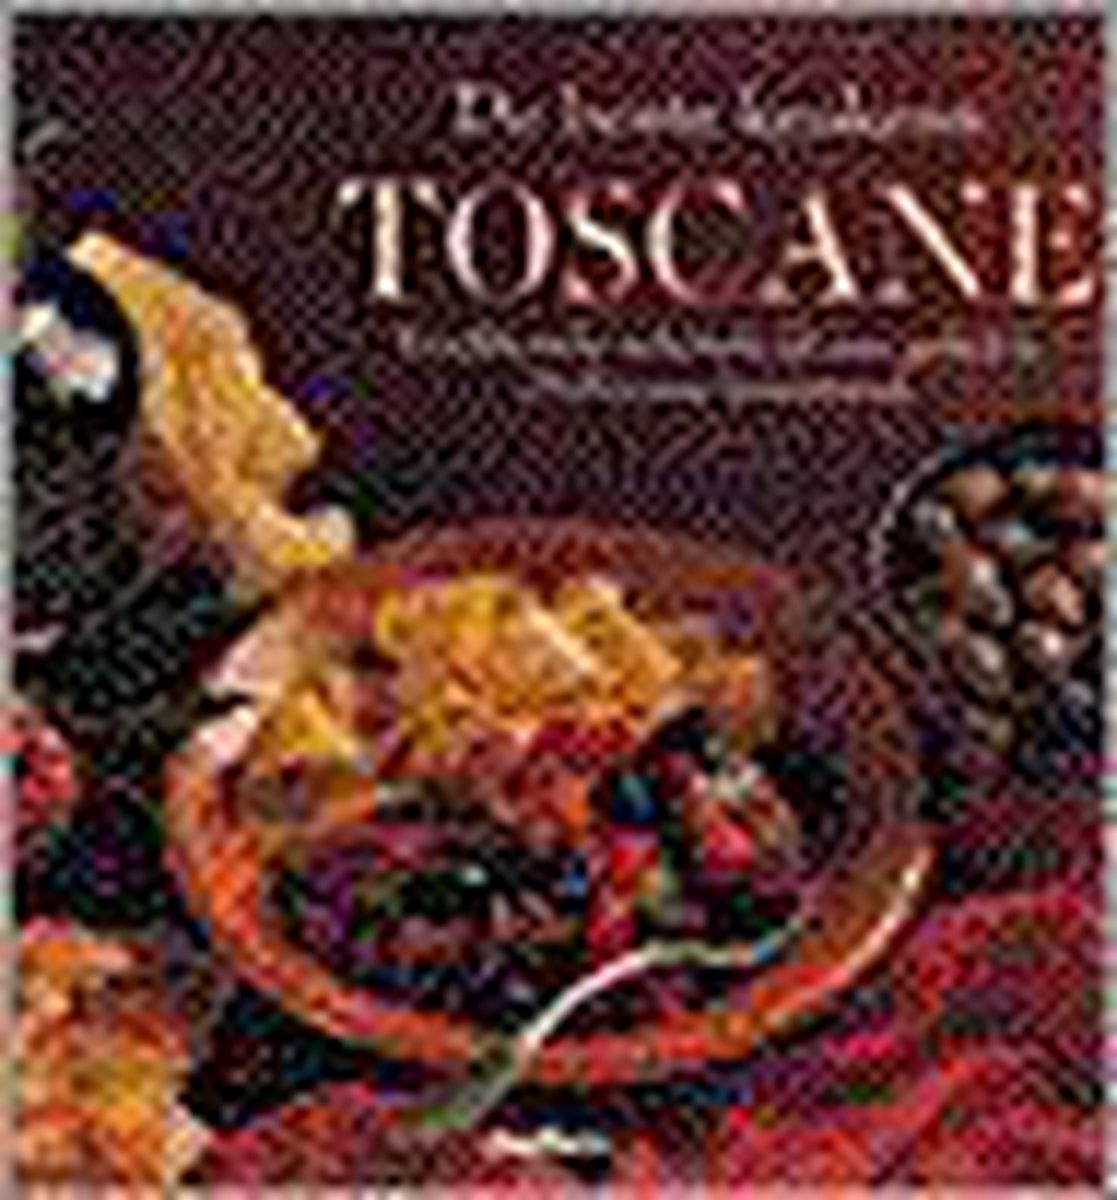 Toscane beste keukens